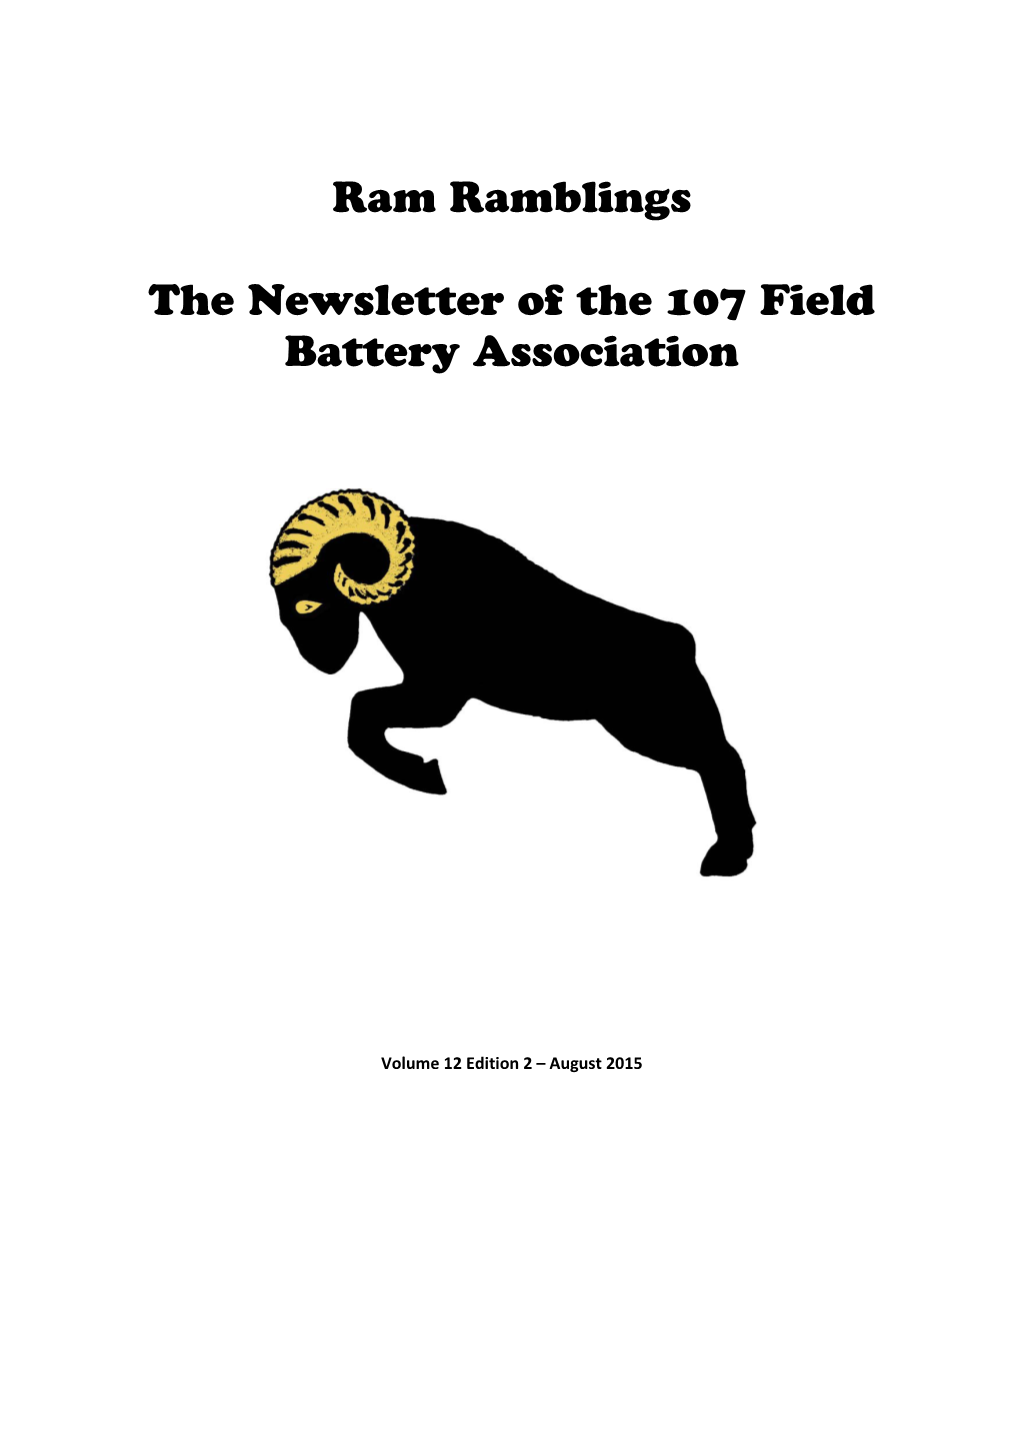 Ram Ramblings the Newsletter of the 107 Field Battery Association